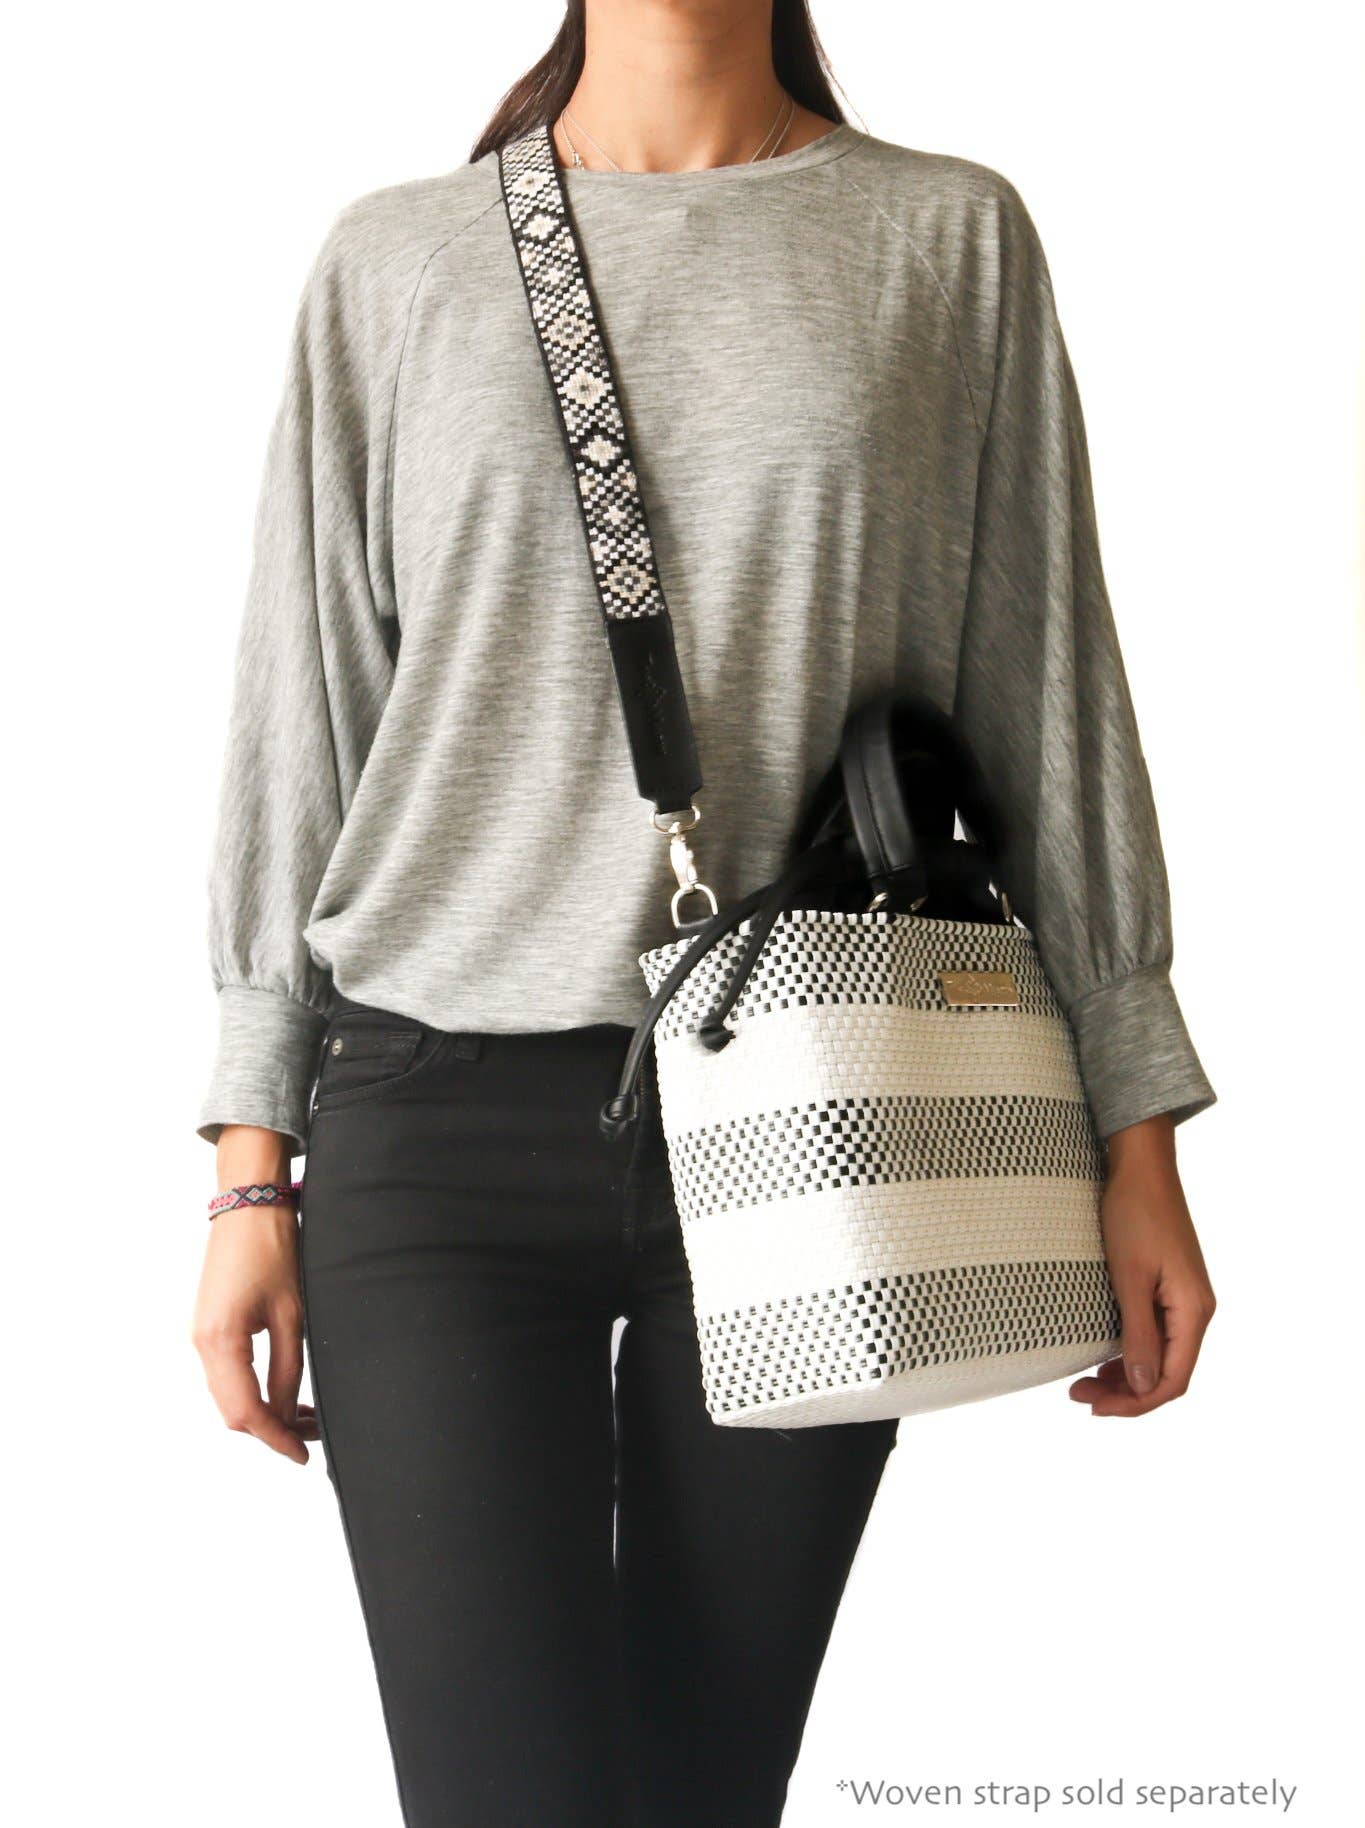 Lolo Medium Woven Crossbody with Drawstring Bag: Black & White